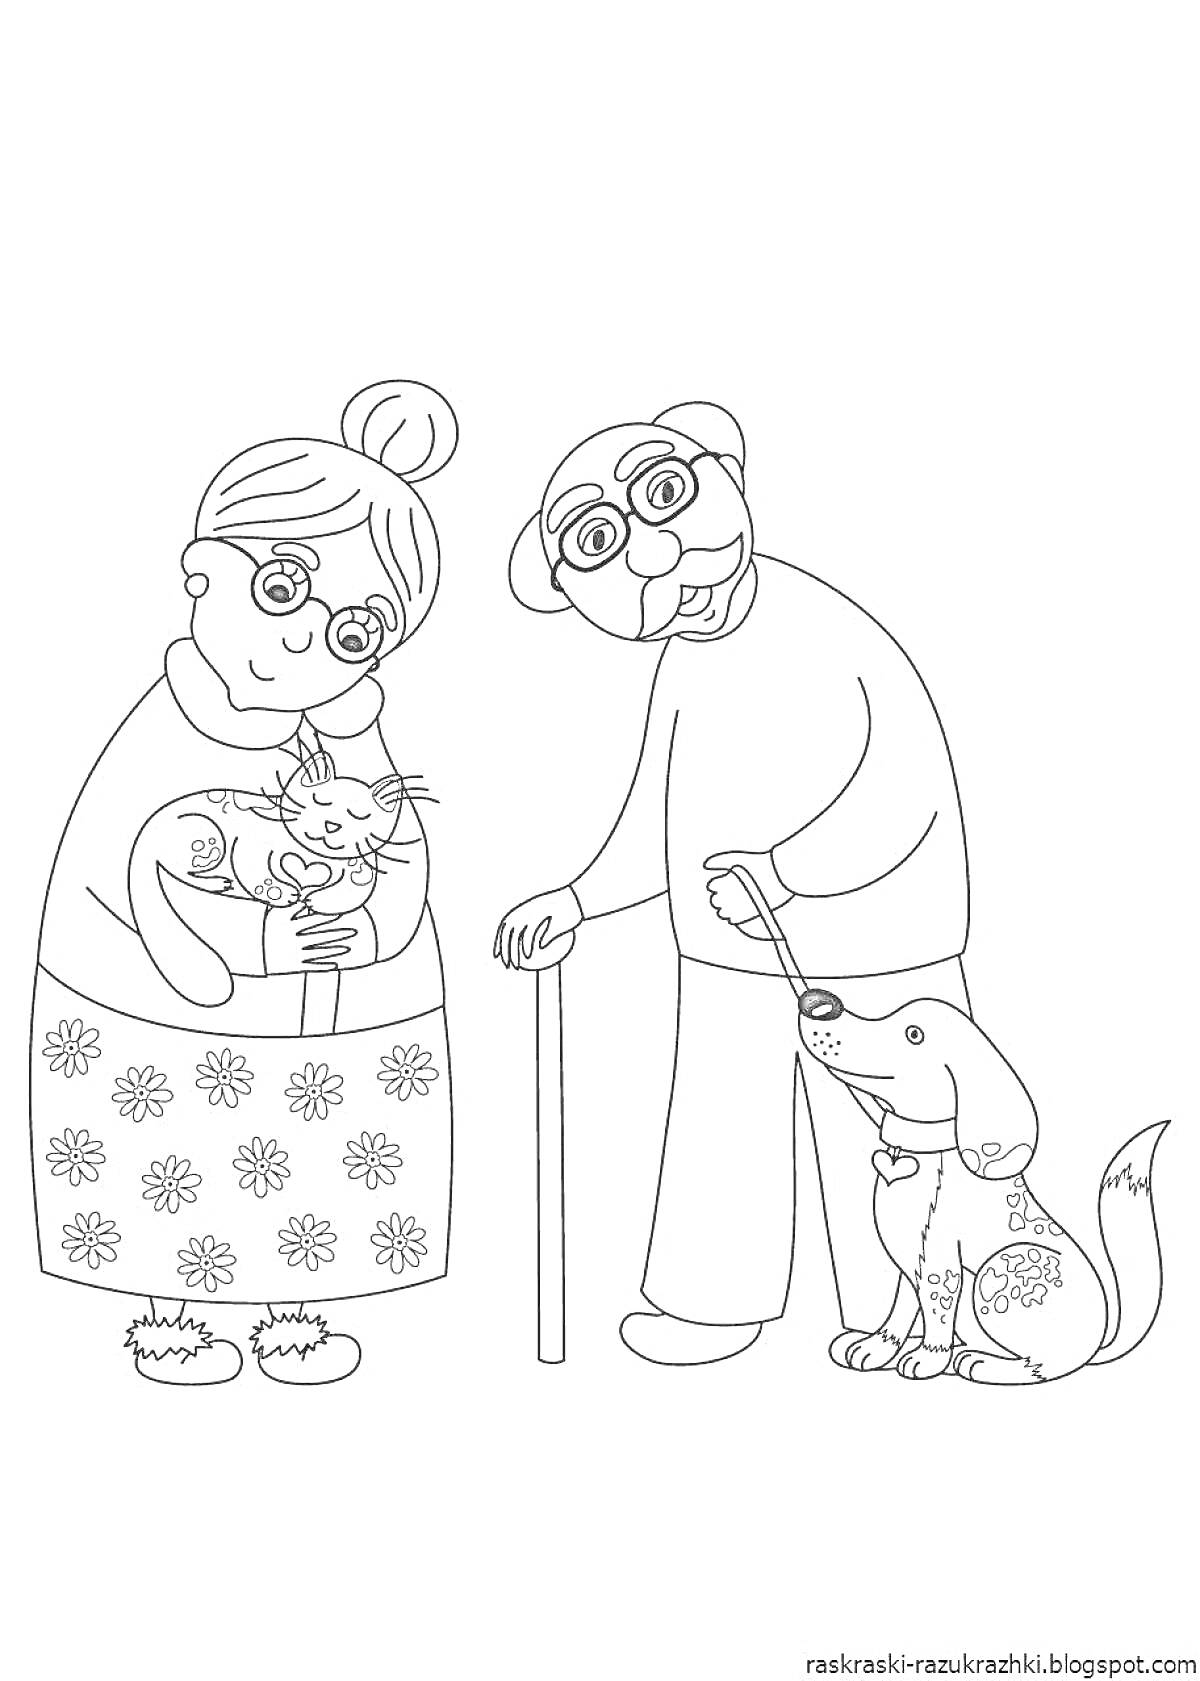 На раскраске изображено: Бабушка, Собака, Очки, Цветы